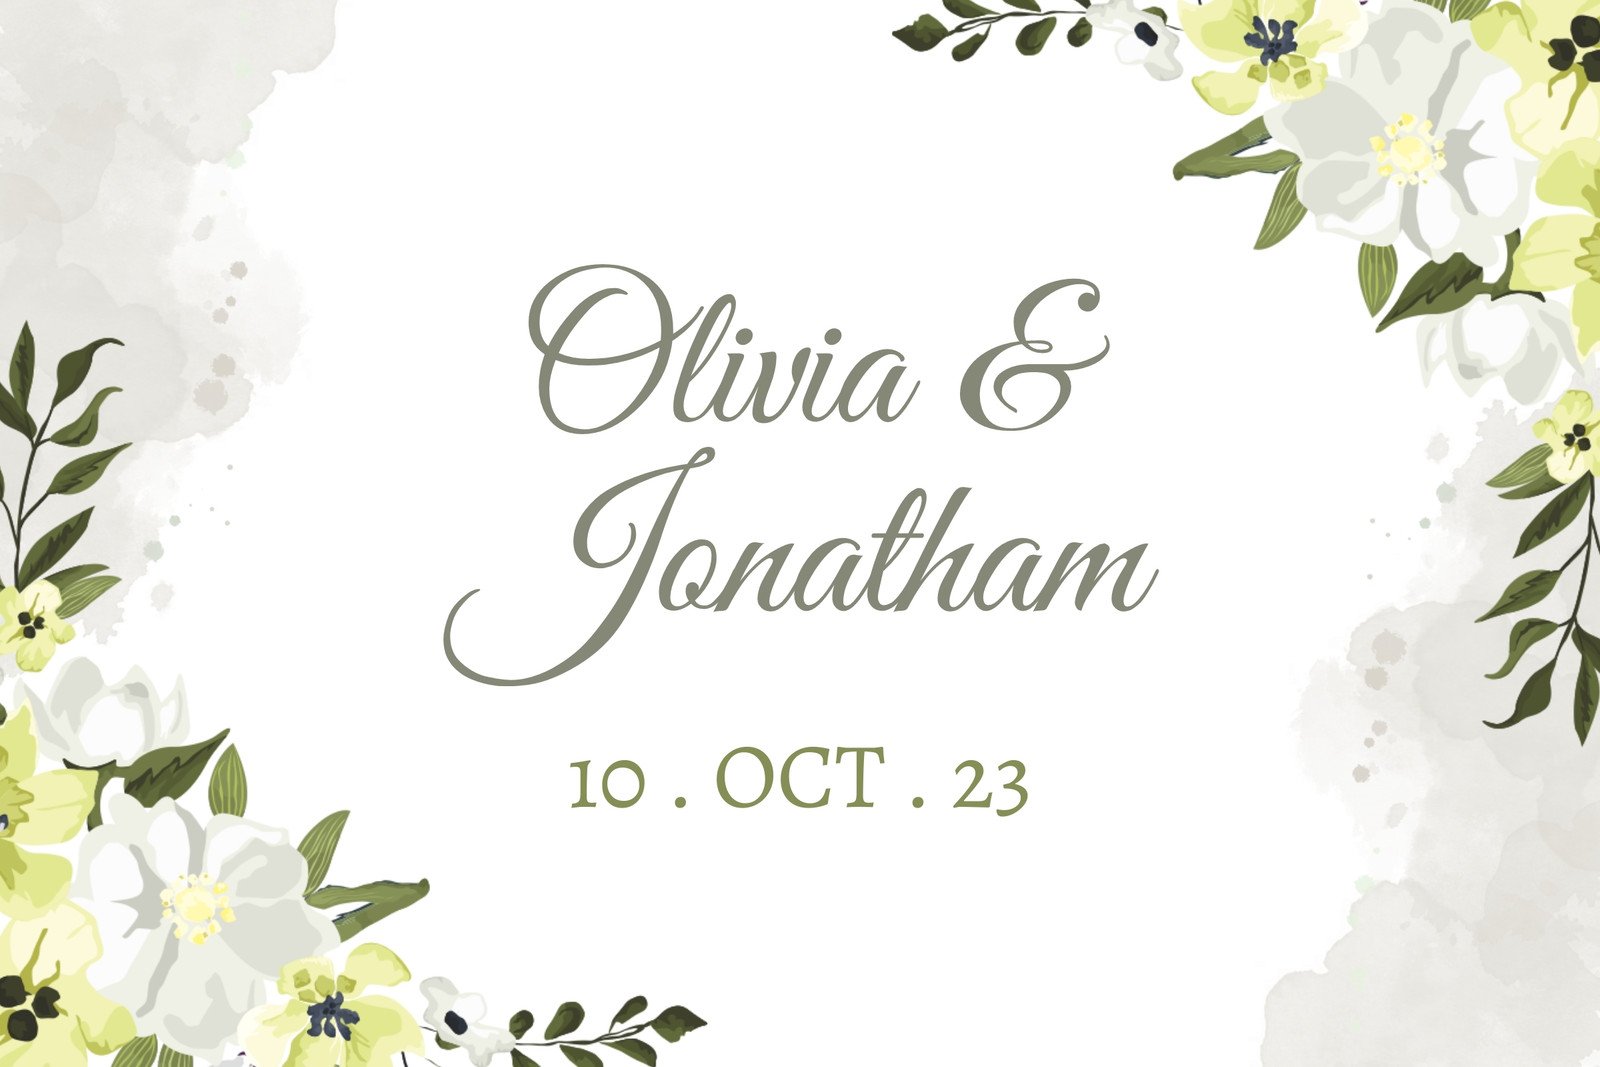 https://marketplace.canva.com/EAFZcJIXt-E/1/0/1600w/canva-white-light-gray-vintage-floral-border-corner-wedding-label-36Oe69sy_tA.jpg